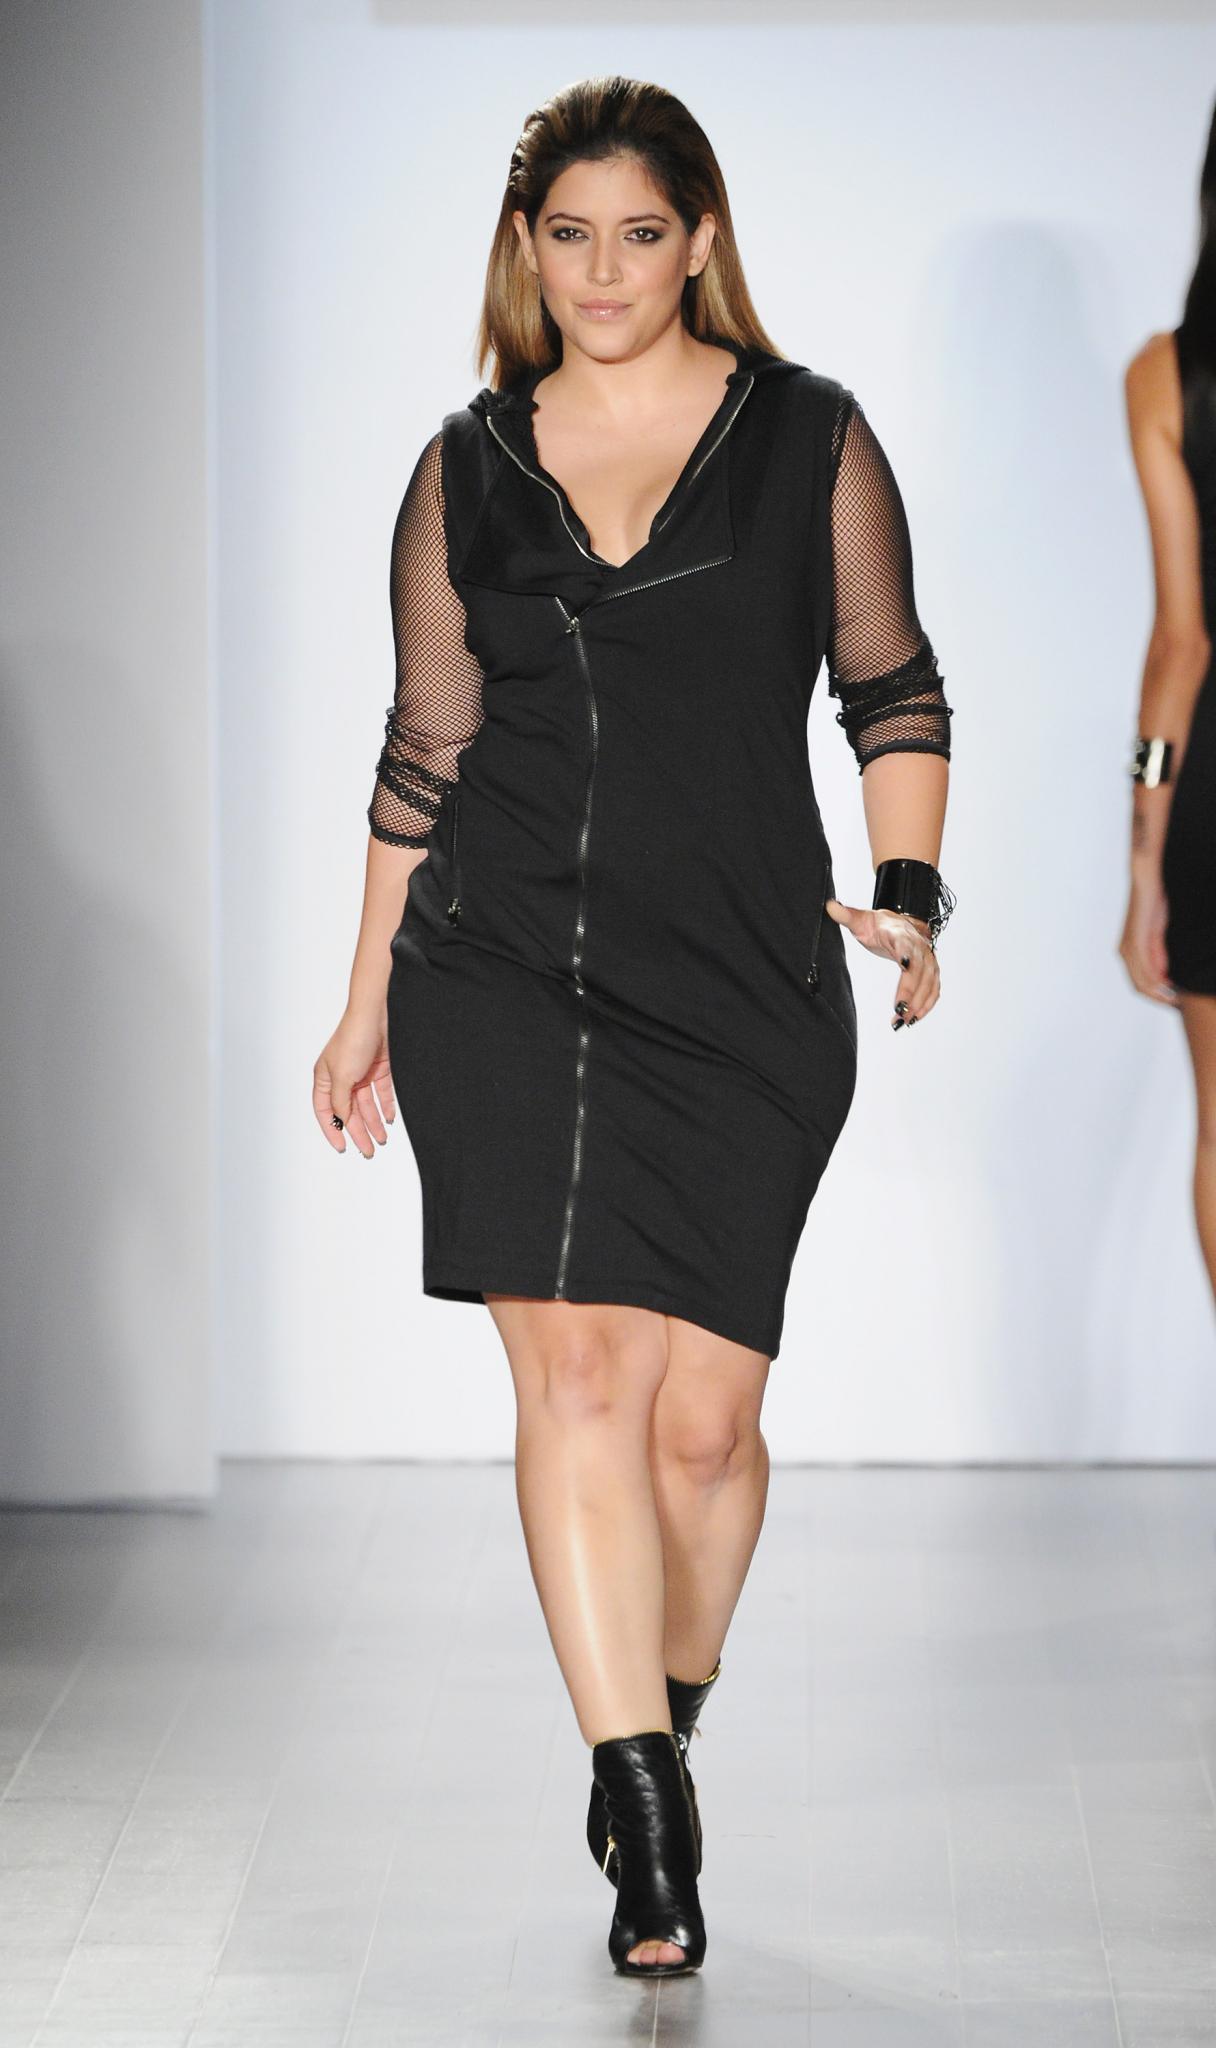 Curvy Model of The Month: Denise Bidot
